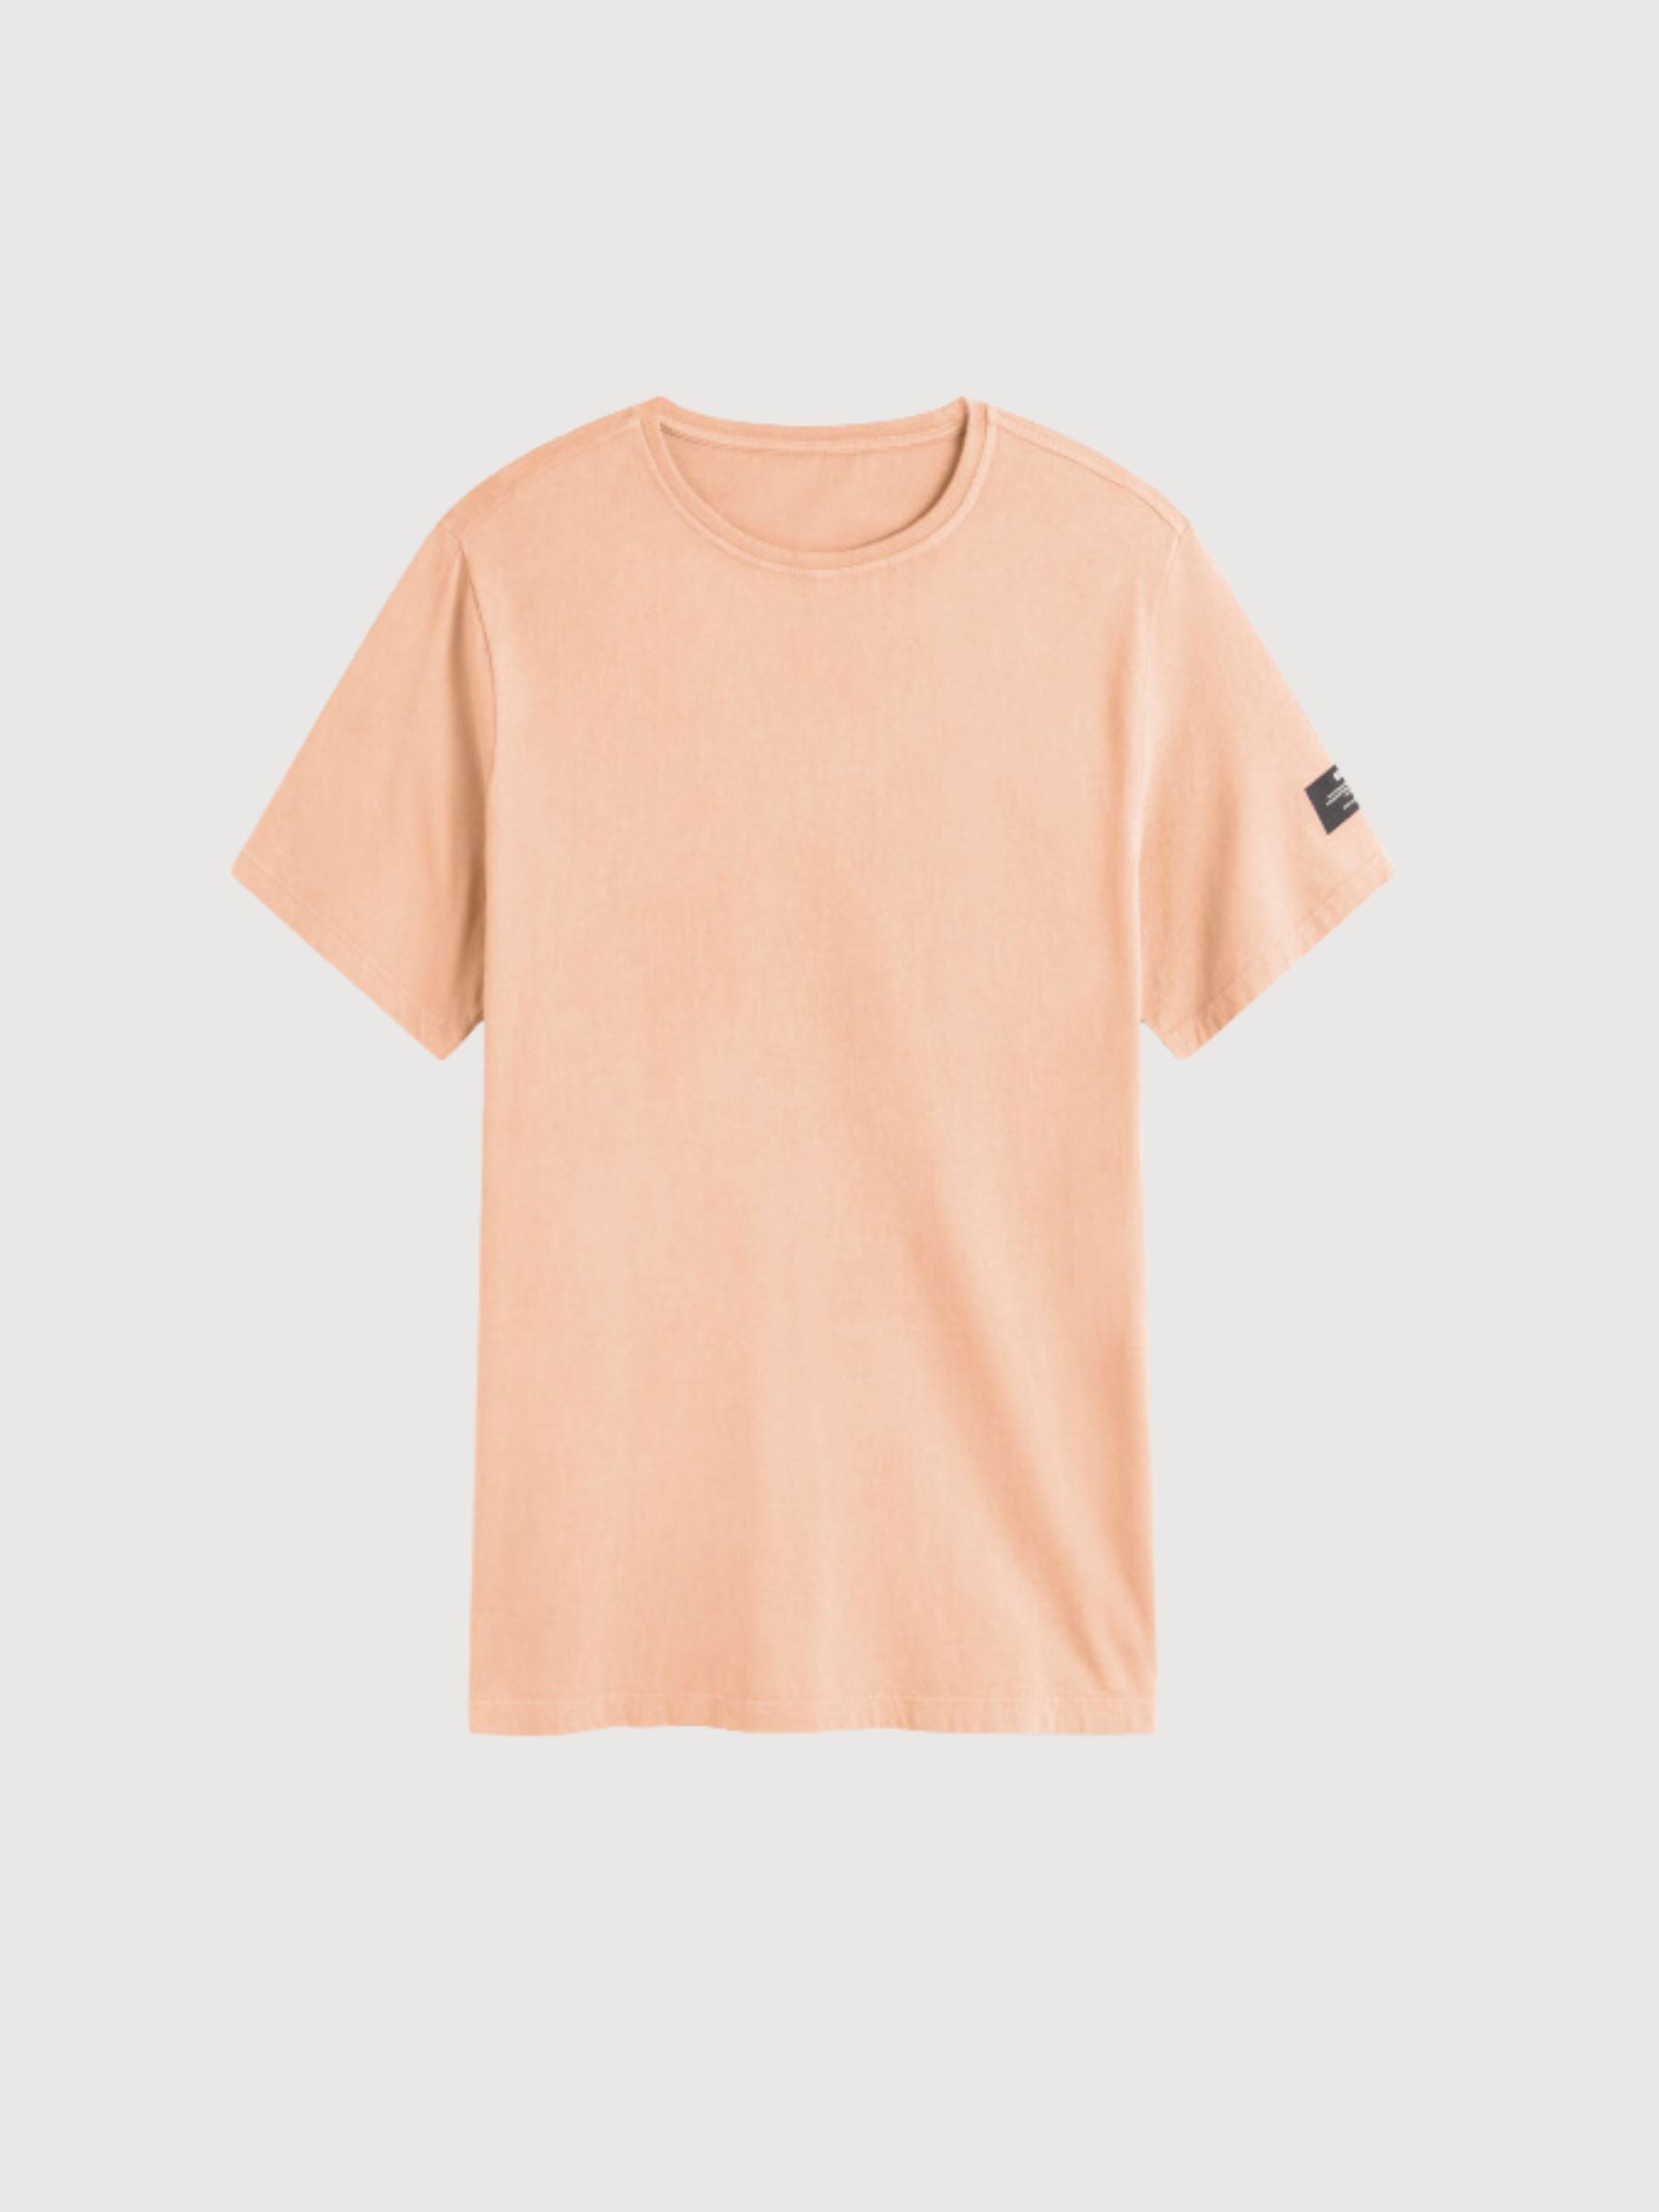 T-Shirt Vent Orange aus recycelter Baumwolle | Ecoalf